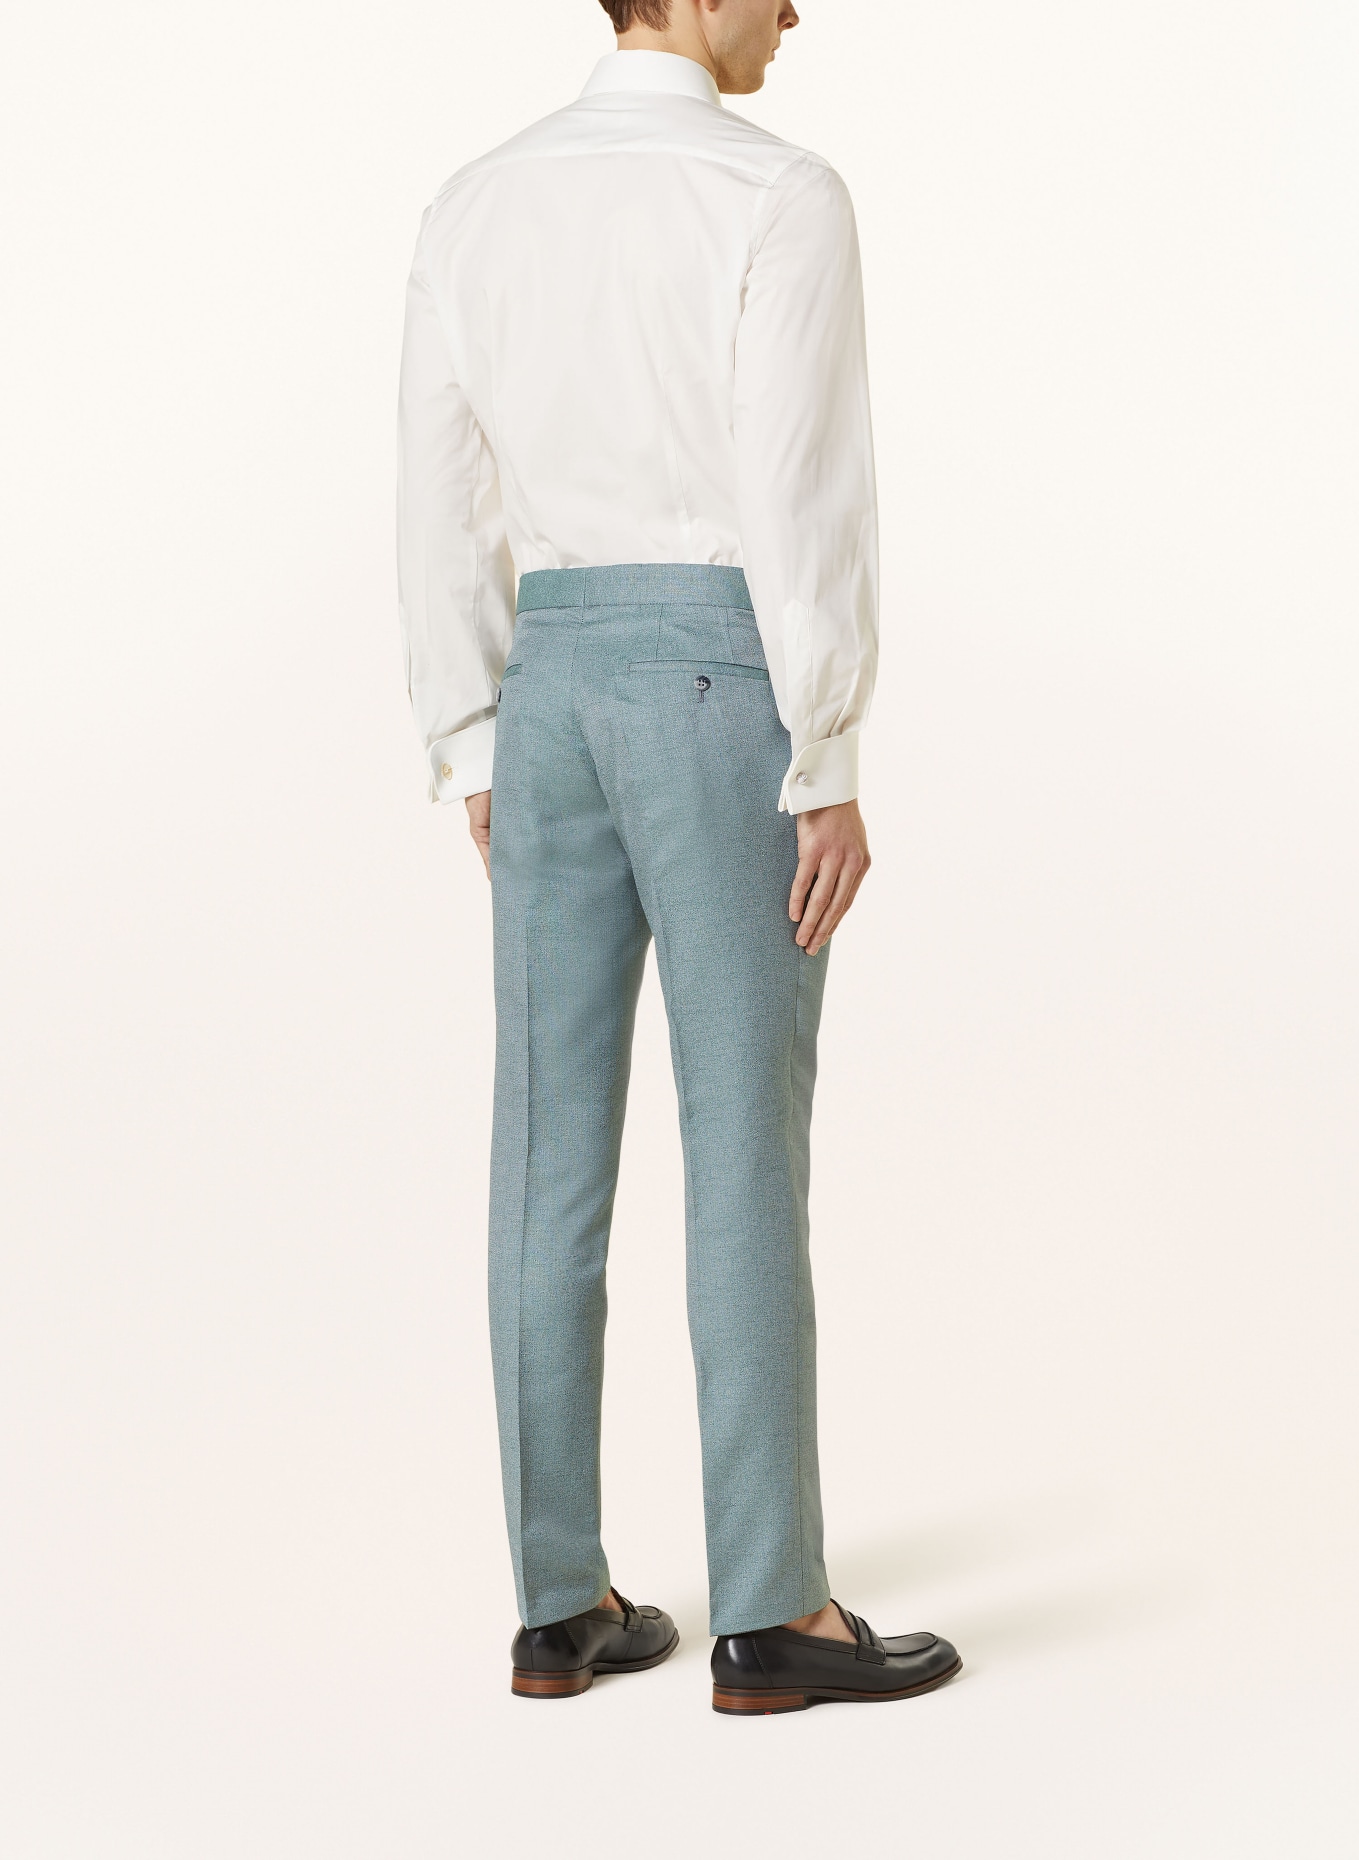 WILVORST Anzughose Extra Slim Fit, Farbe: 045 grün (Bild 4)